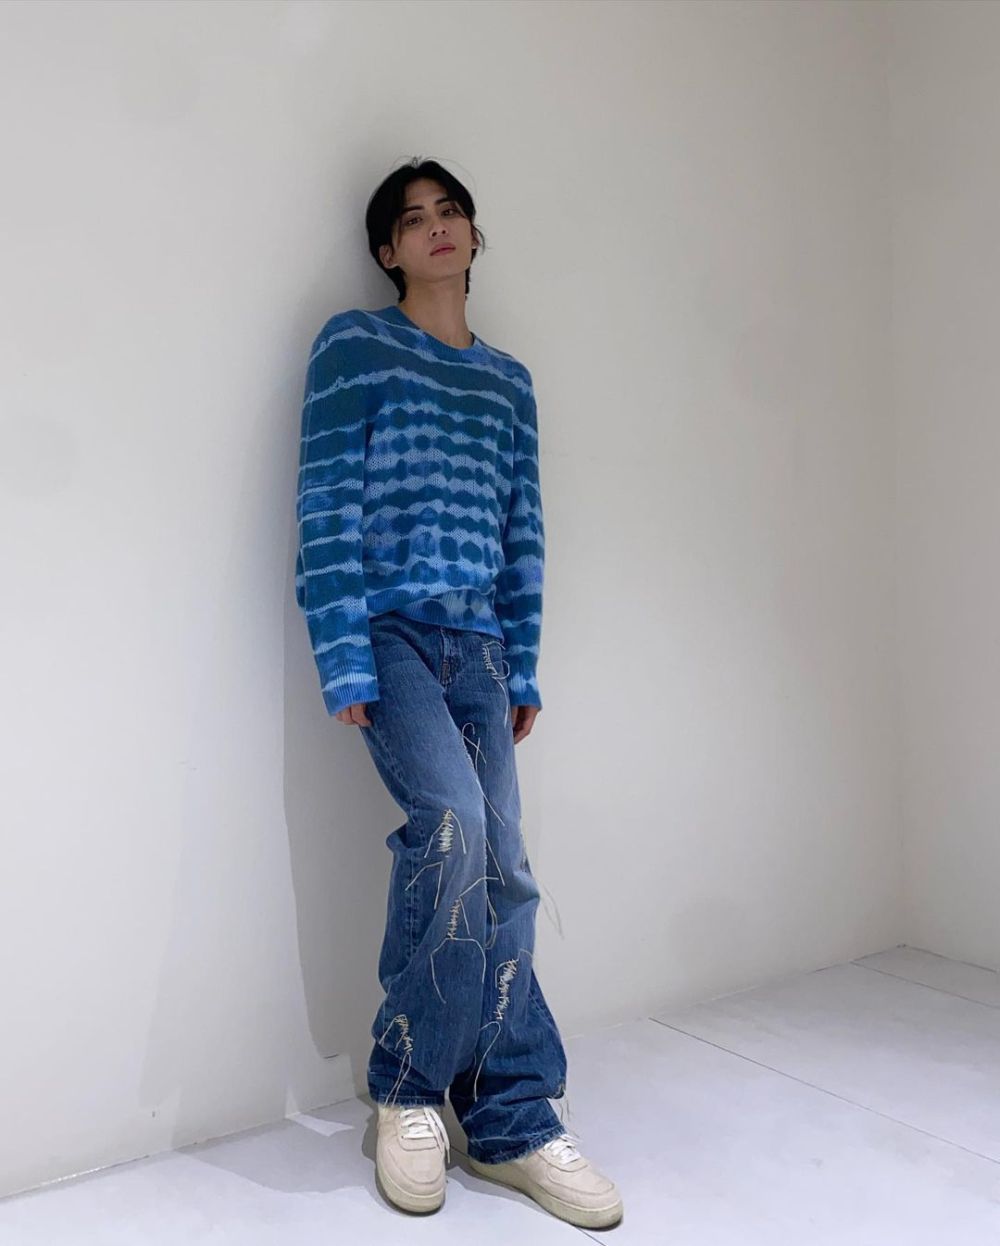 9 Inspirasi Outfit Sweatshirt ala Taeyang SF9, Simpel dan Fashionable!